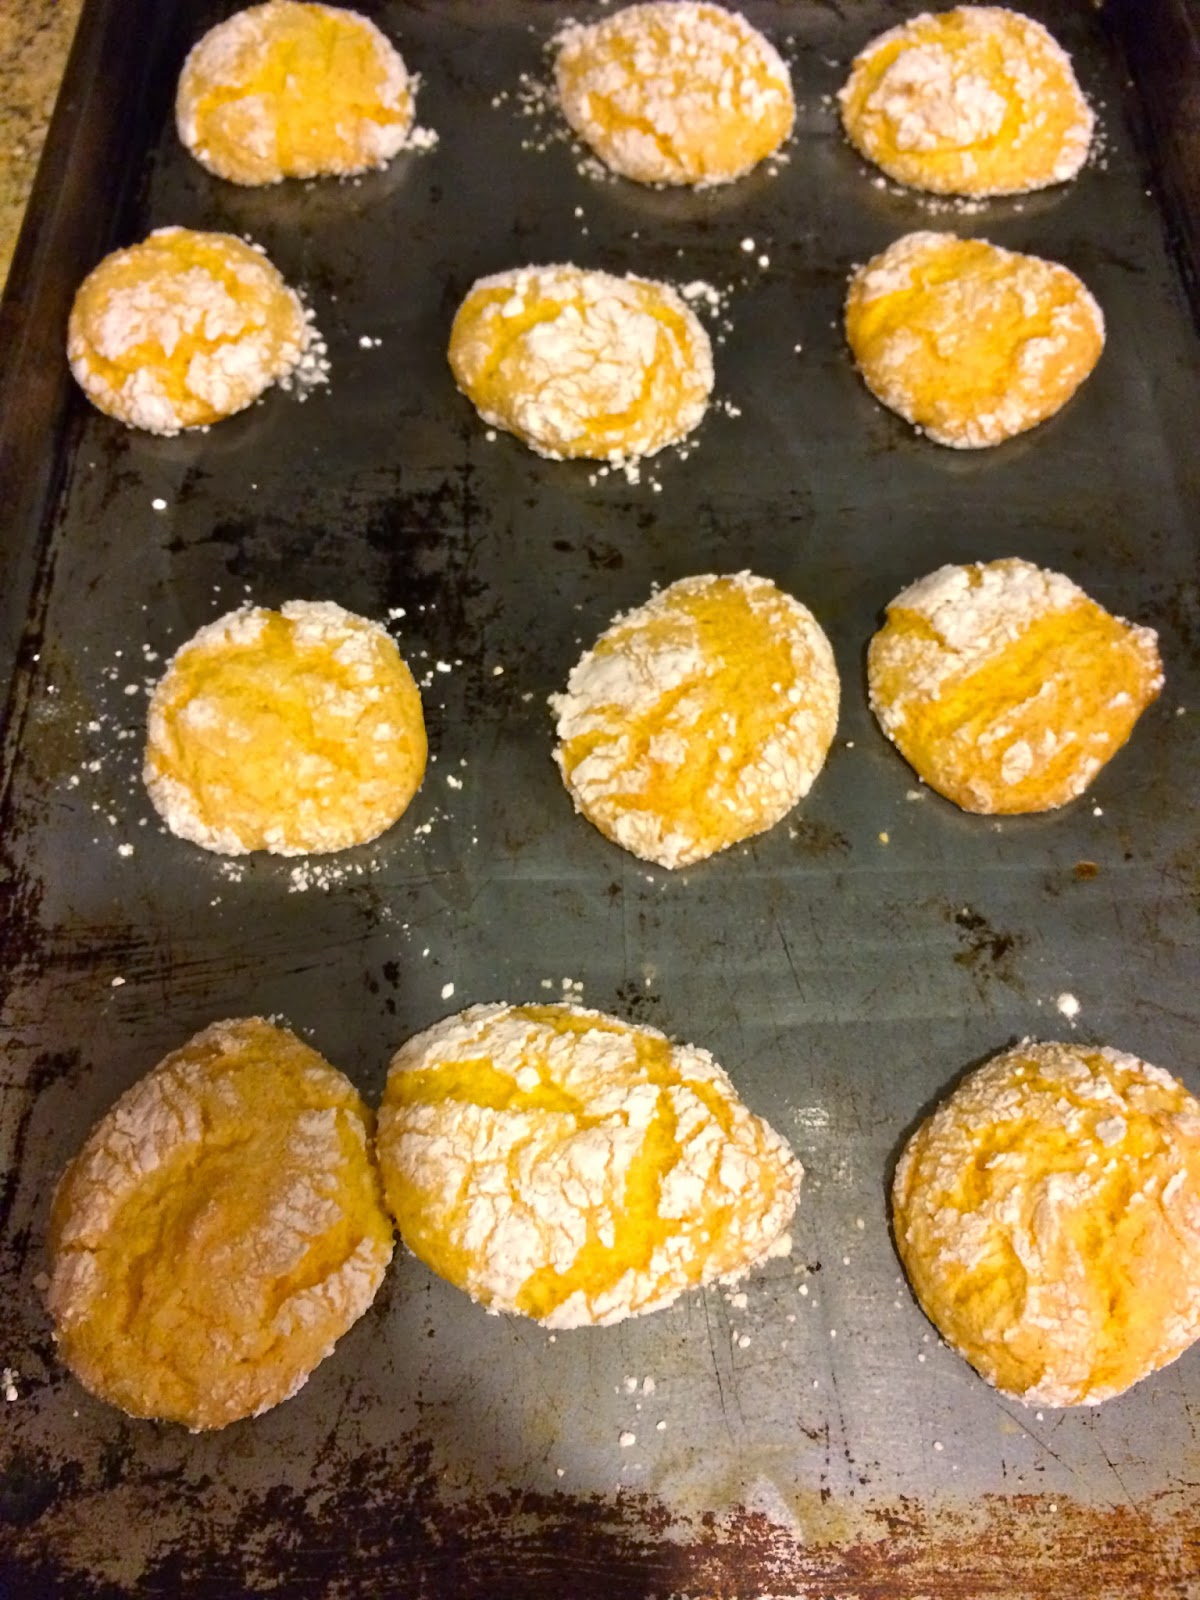 I do deClaire: Christmas Cookies: Lemon Cookies